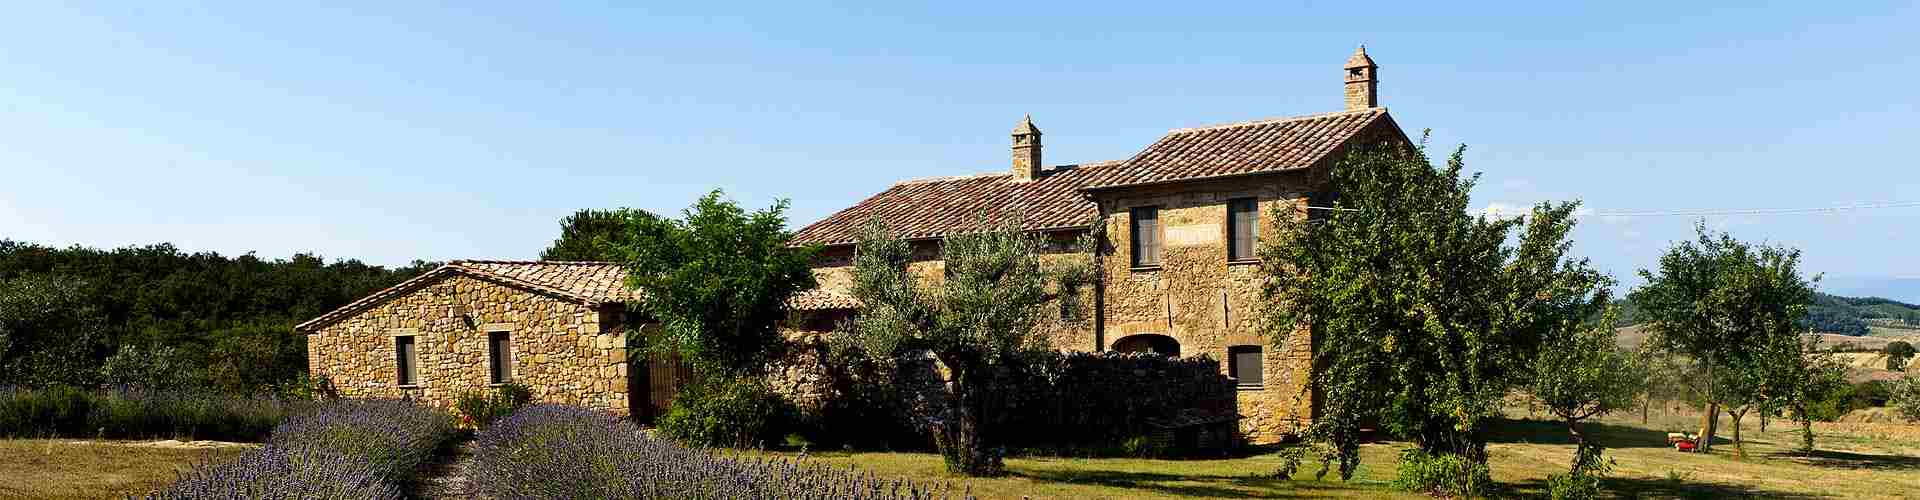 Casas rurales para 2 personas en Girona
          
          

